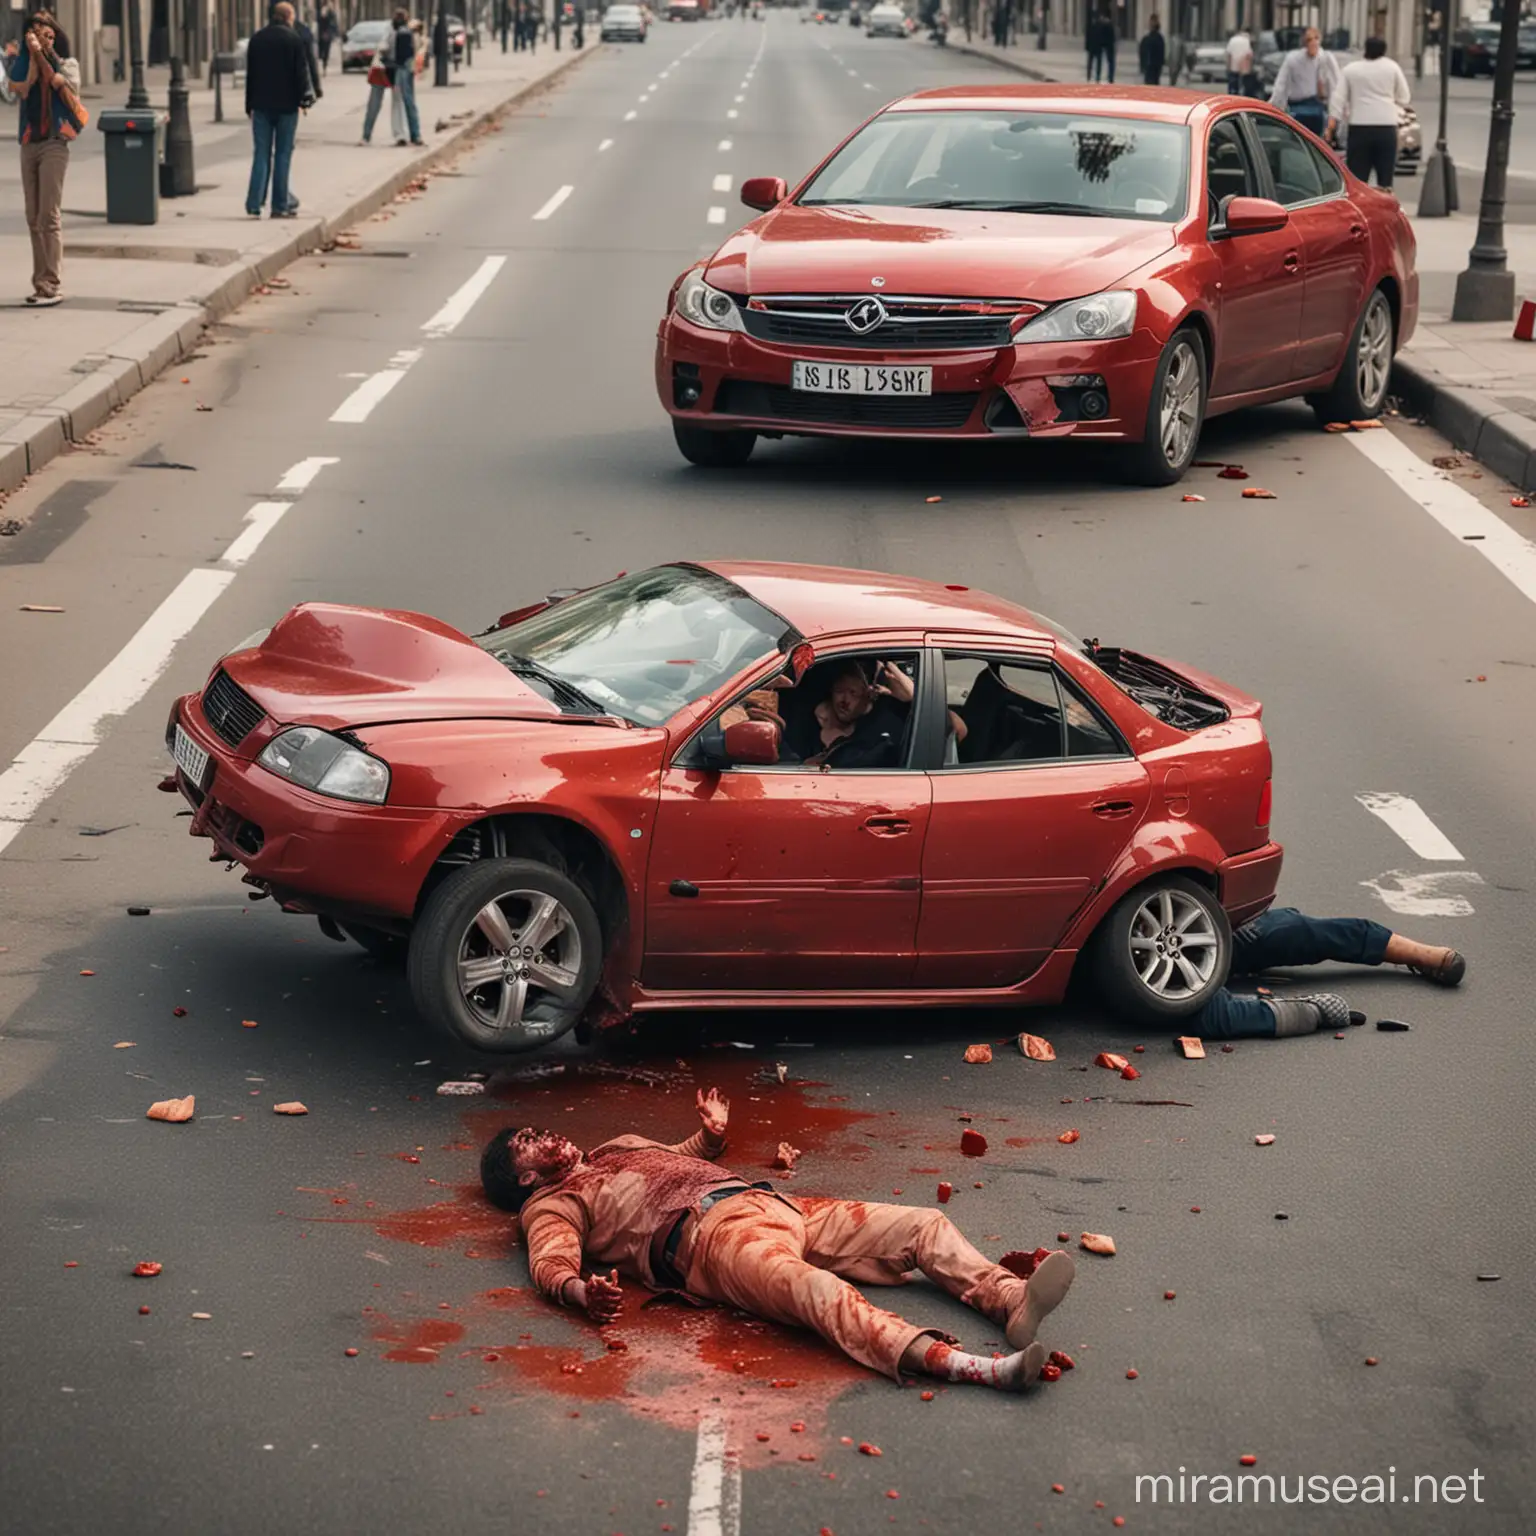 Dramatic Car Crash Scene with Injured Victim on Urban Street